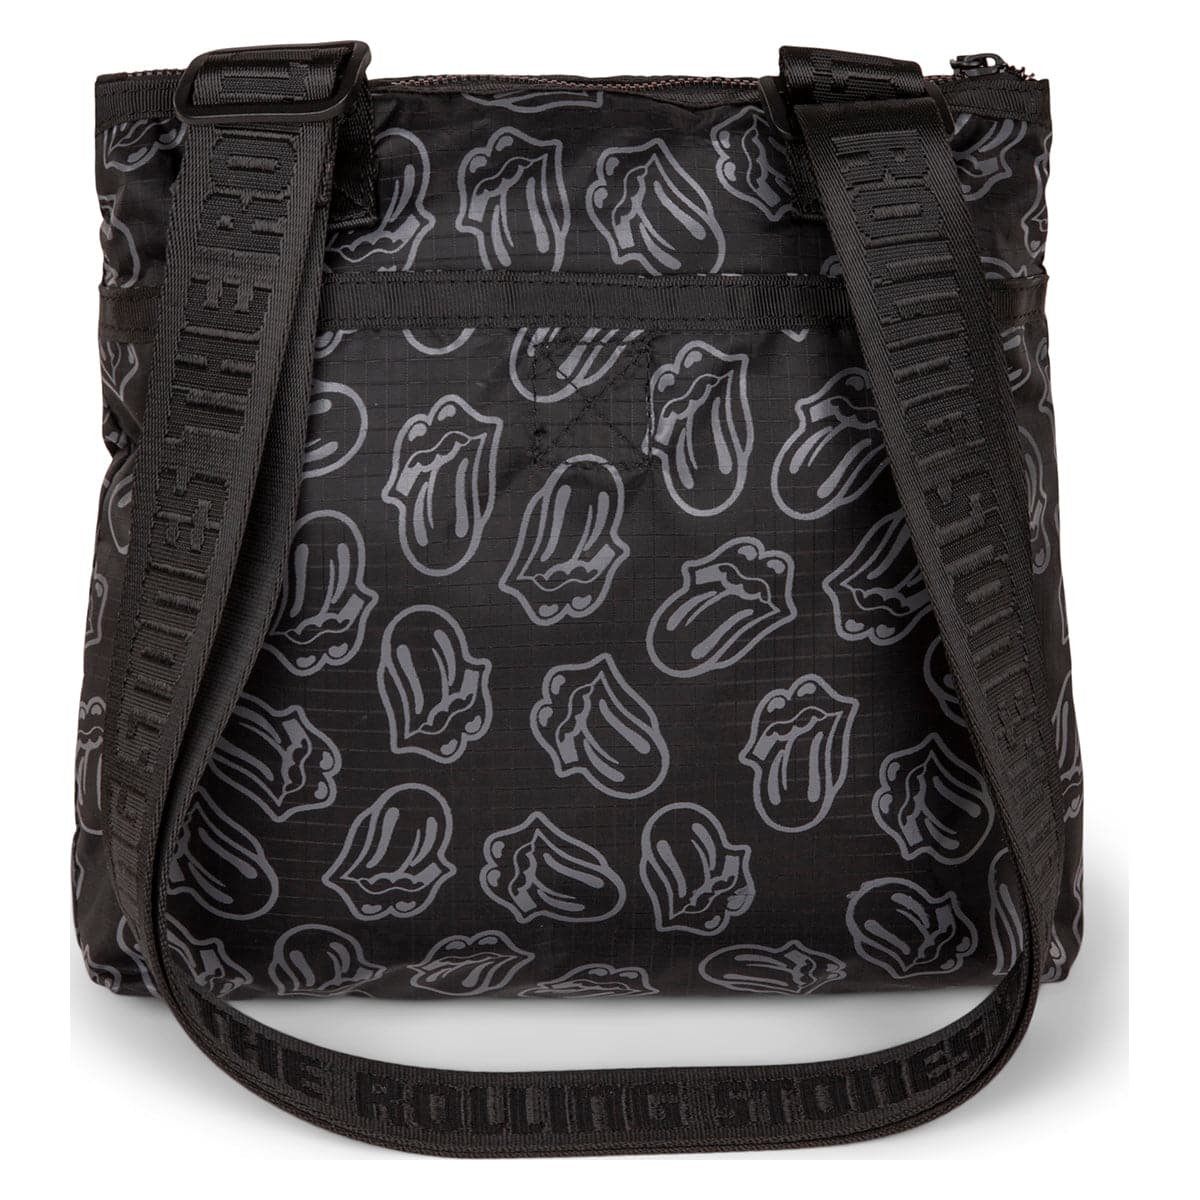 The Rolling Stones Evolution Crossbody Bag